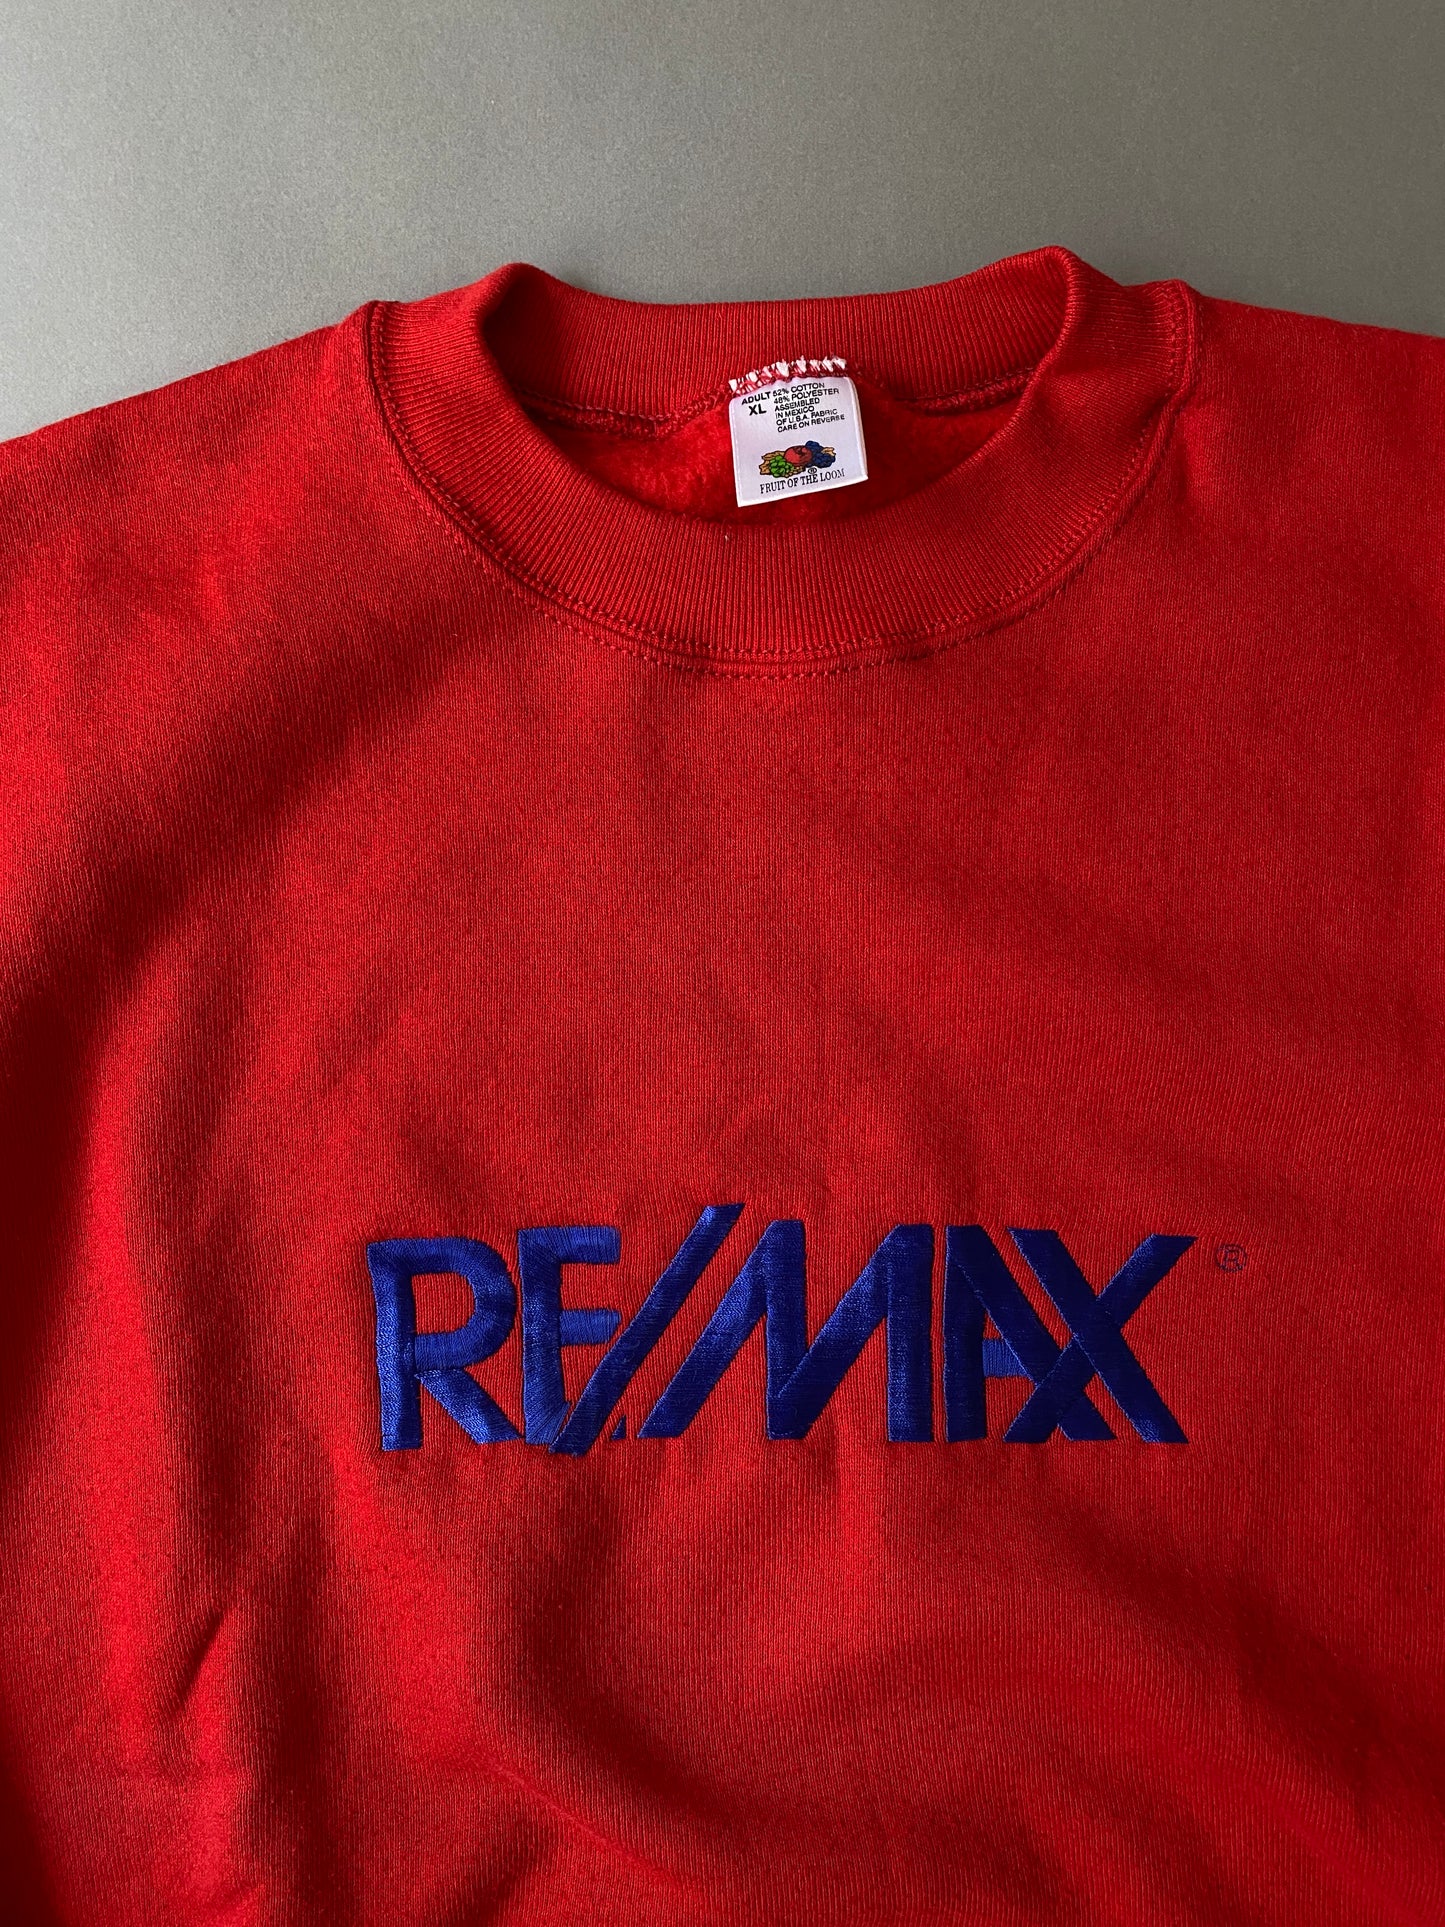 REMAX vintage sweatshirt